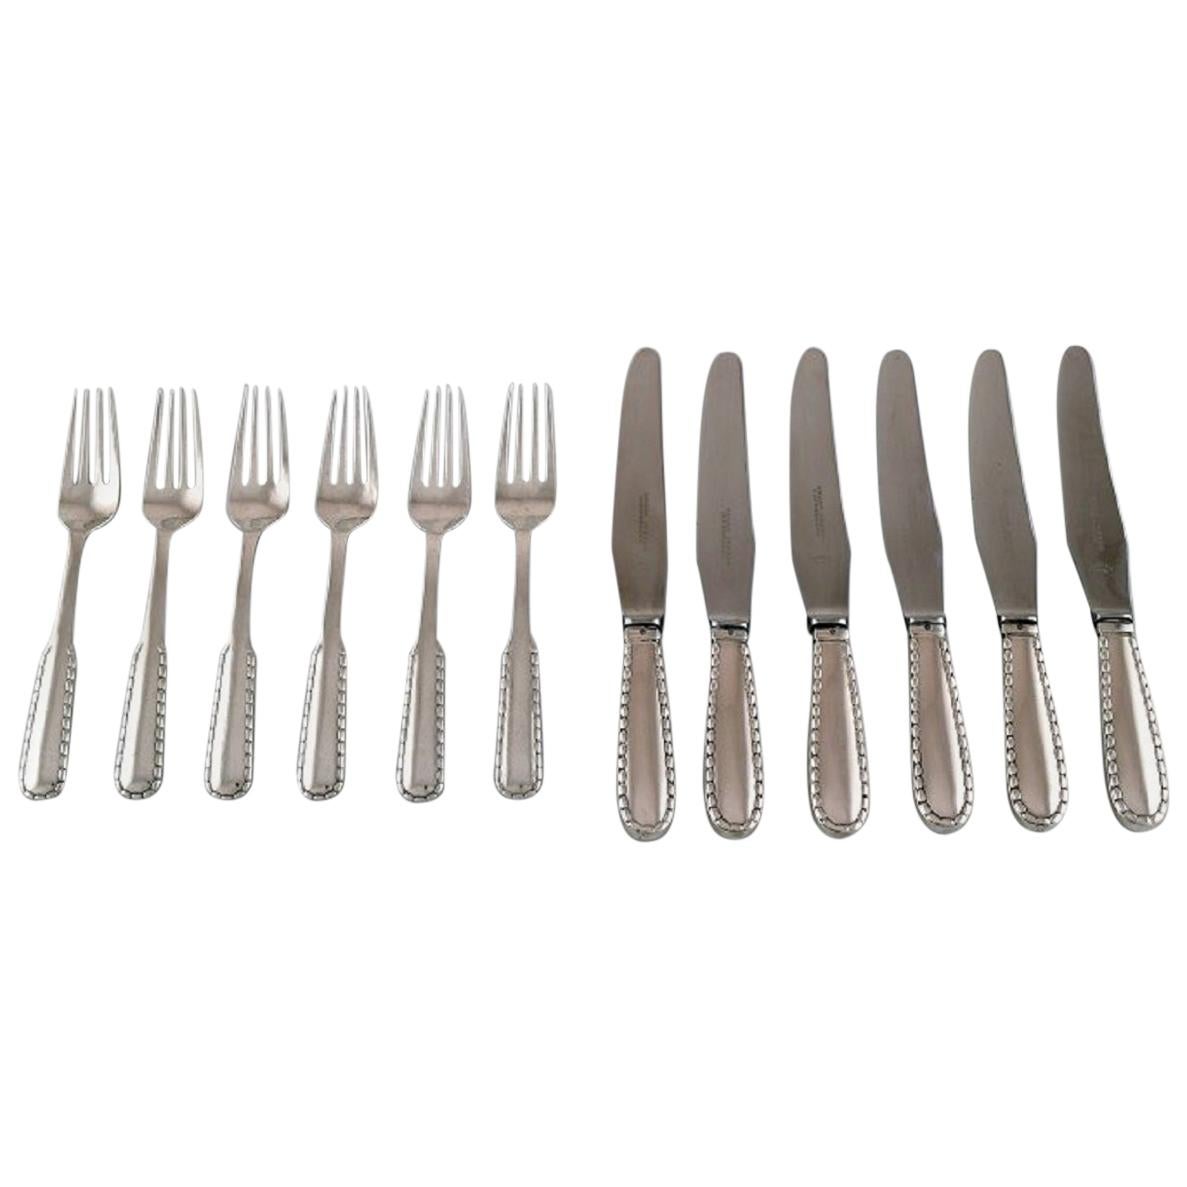 Georg Jensen "Pearl" Cutlery, Six Person Dinner Service in Silver 830